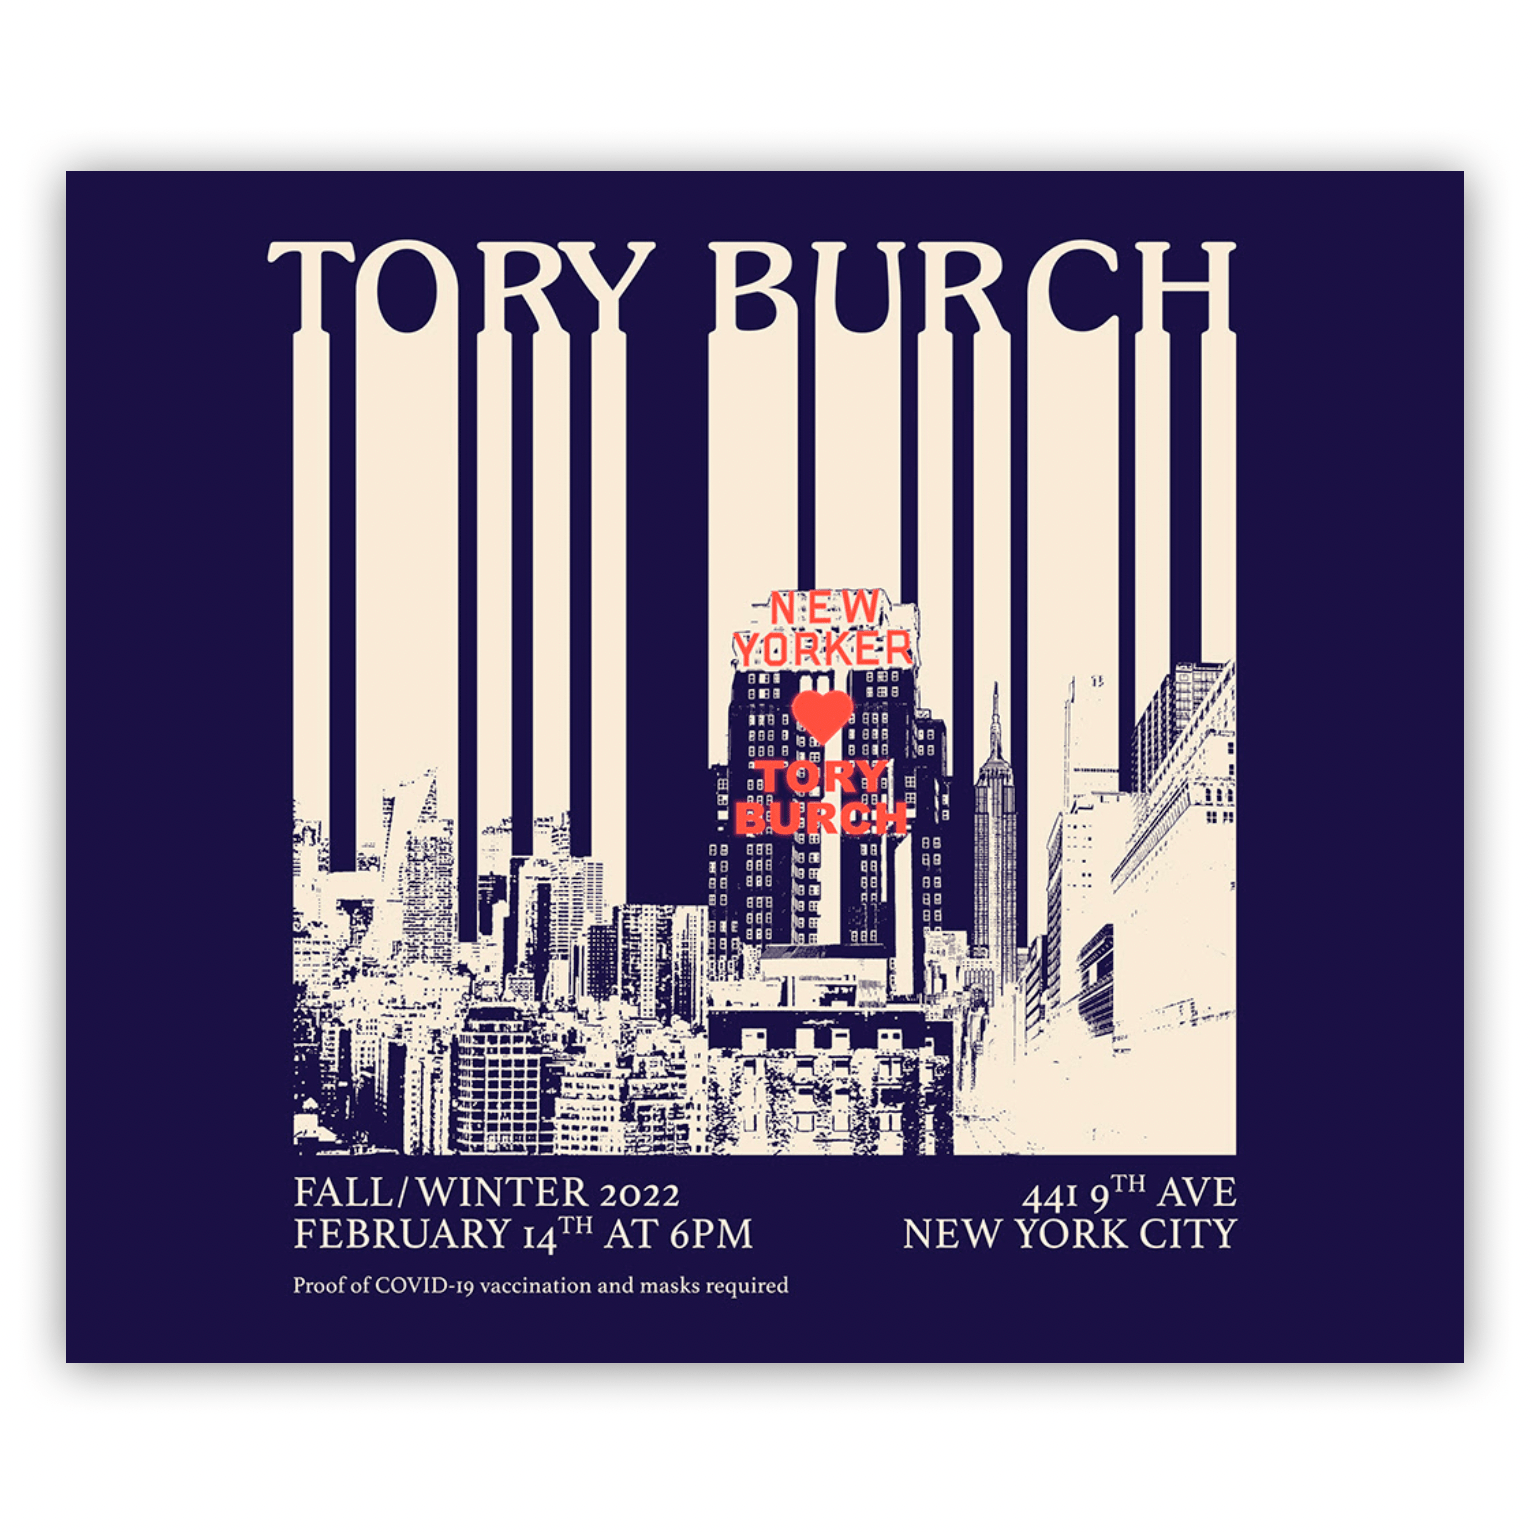 Tory Burch Fall 2022 Fashion show Invitation